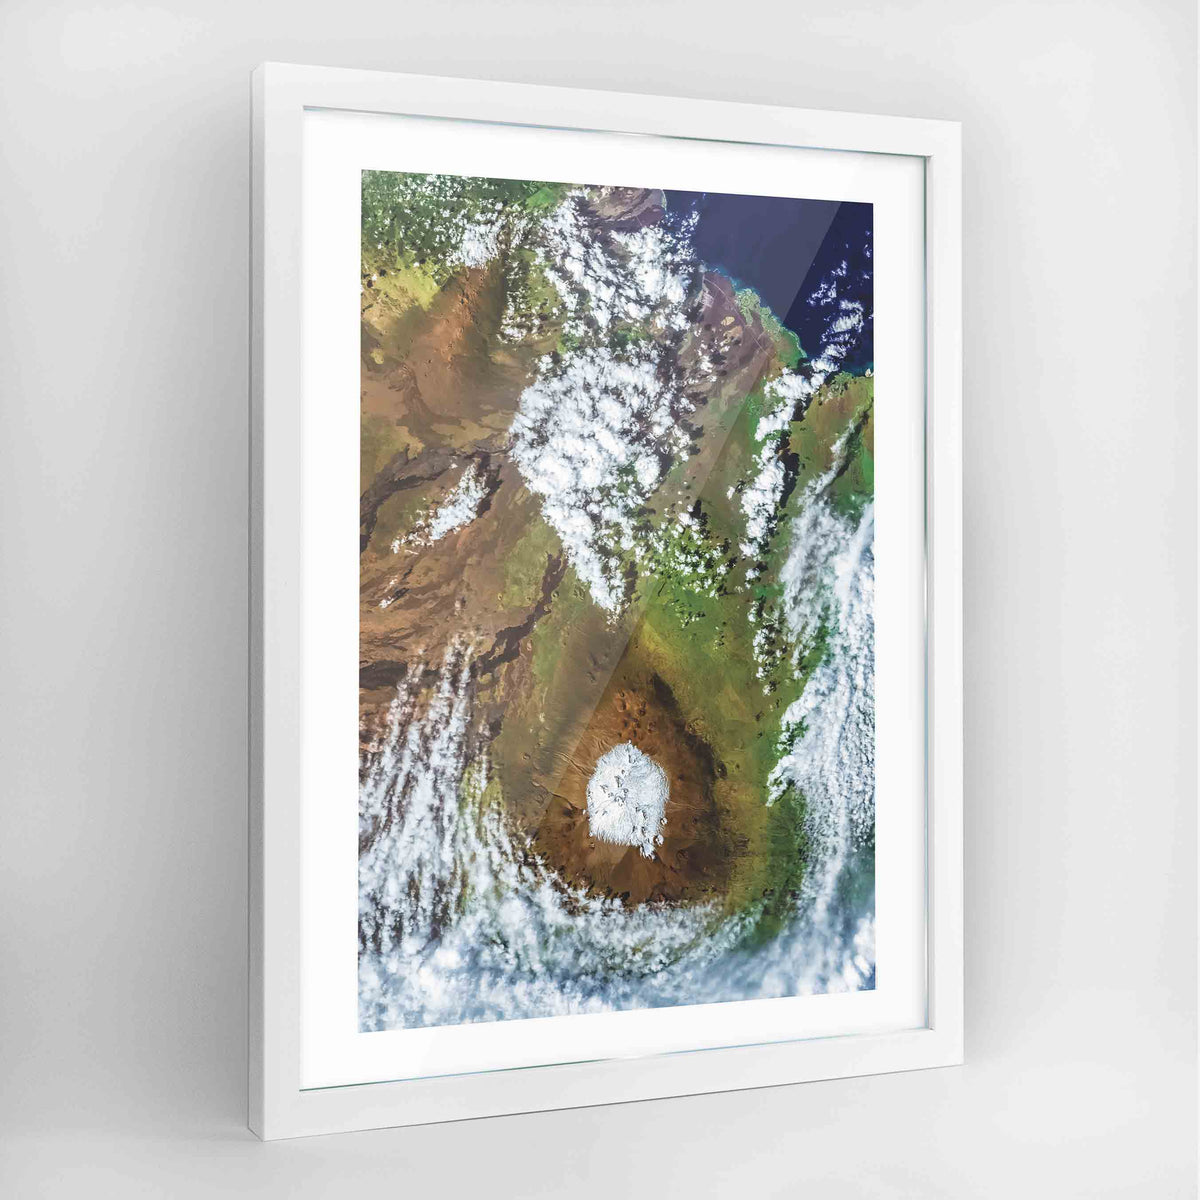 Mauna Kea Earth Photography Art Print - Framed